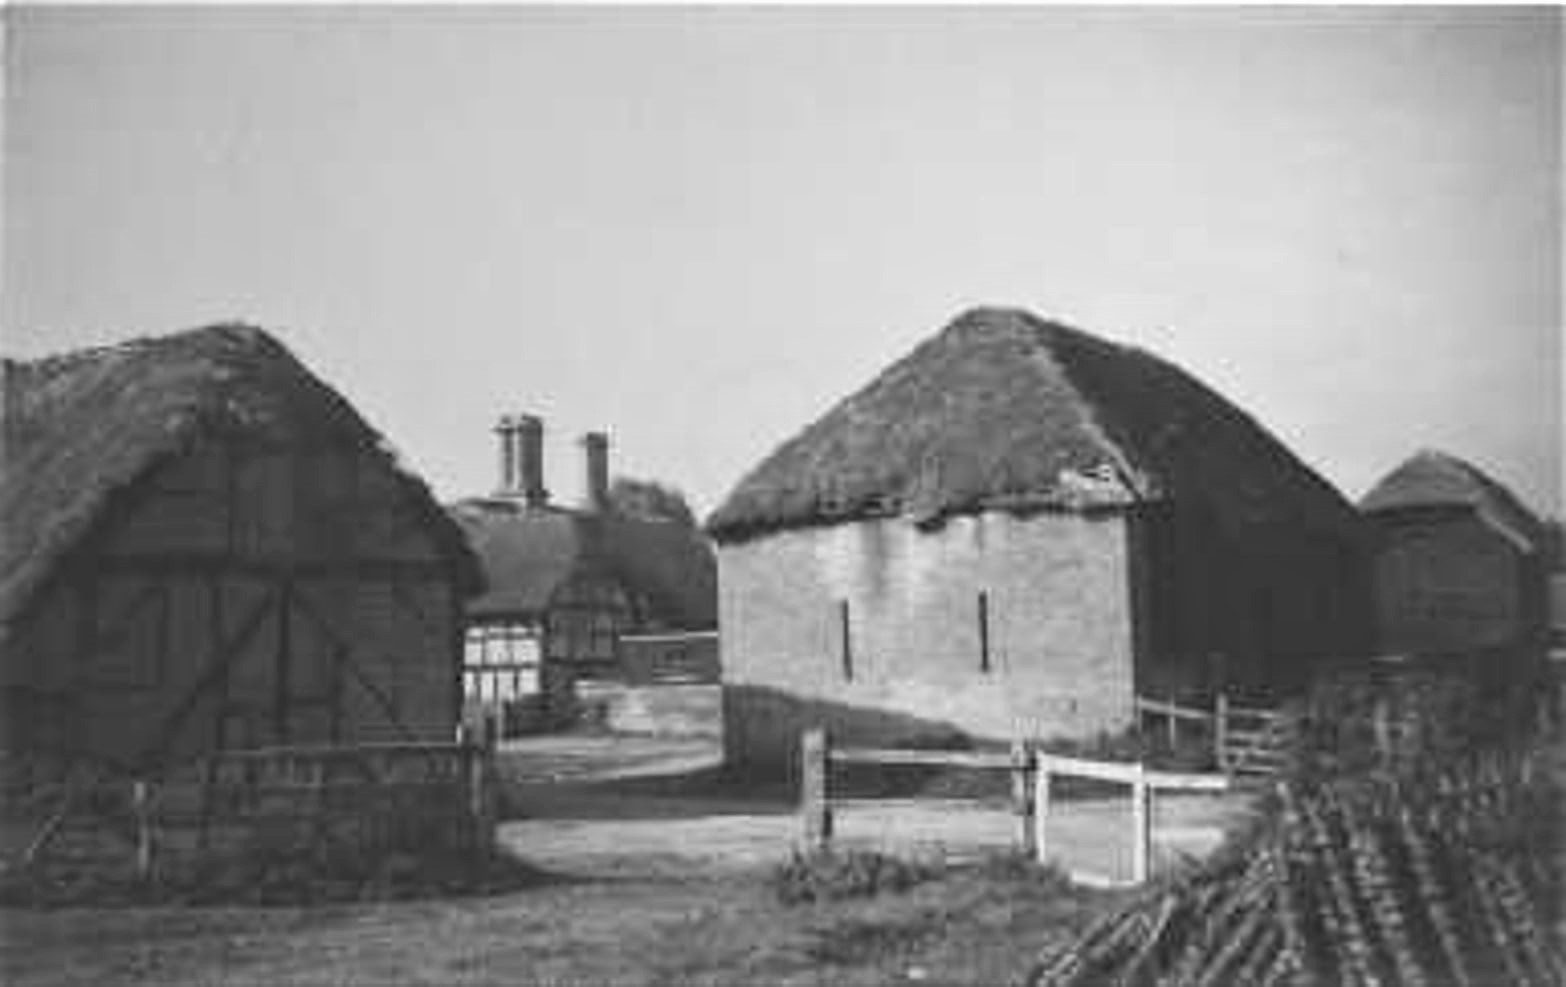 Channells Farm in 1900.